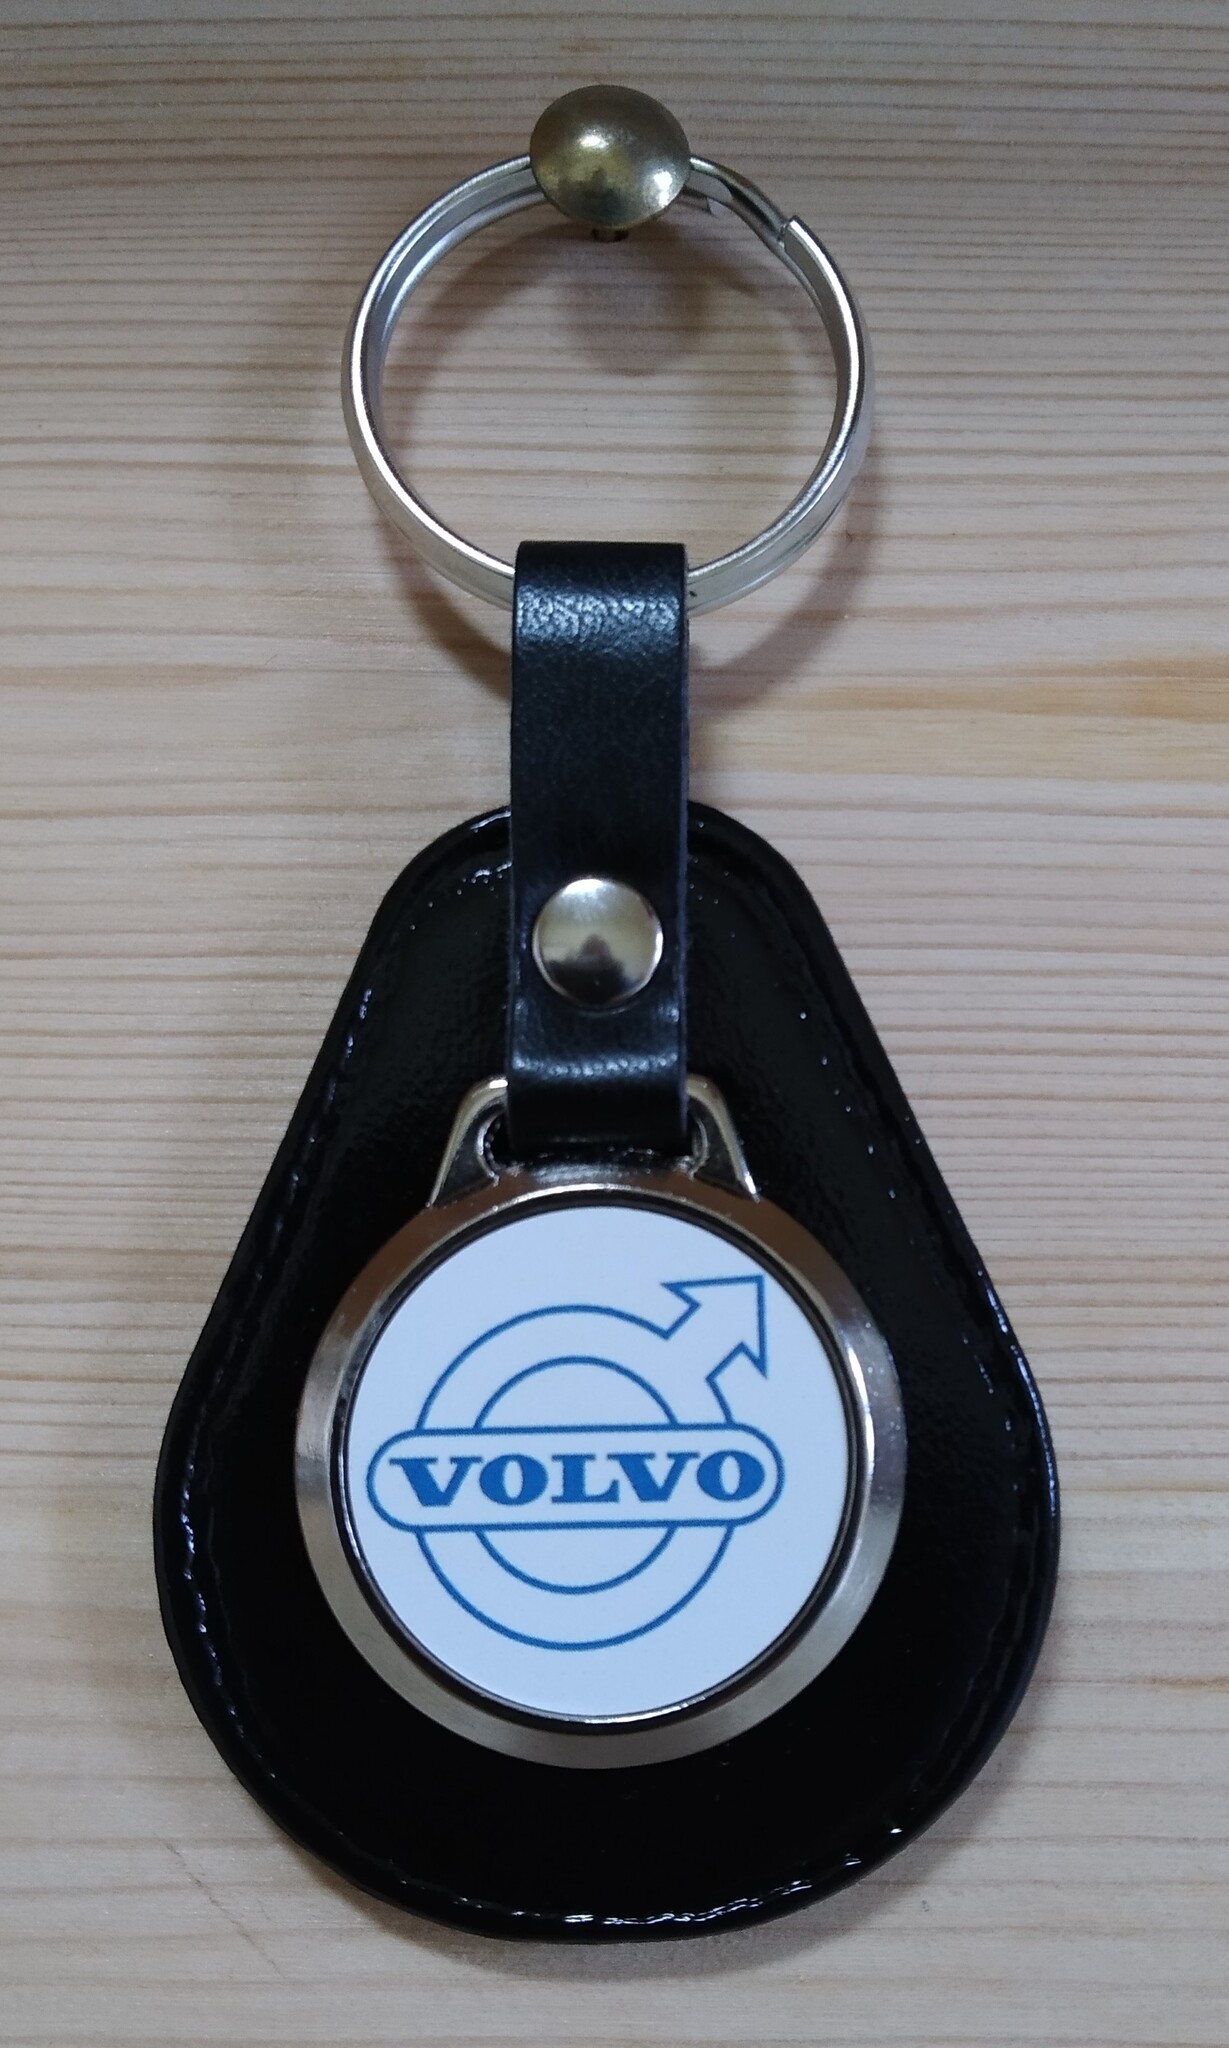 VOLVO VOLVO Porte-clés avec logo. Cuir noir